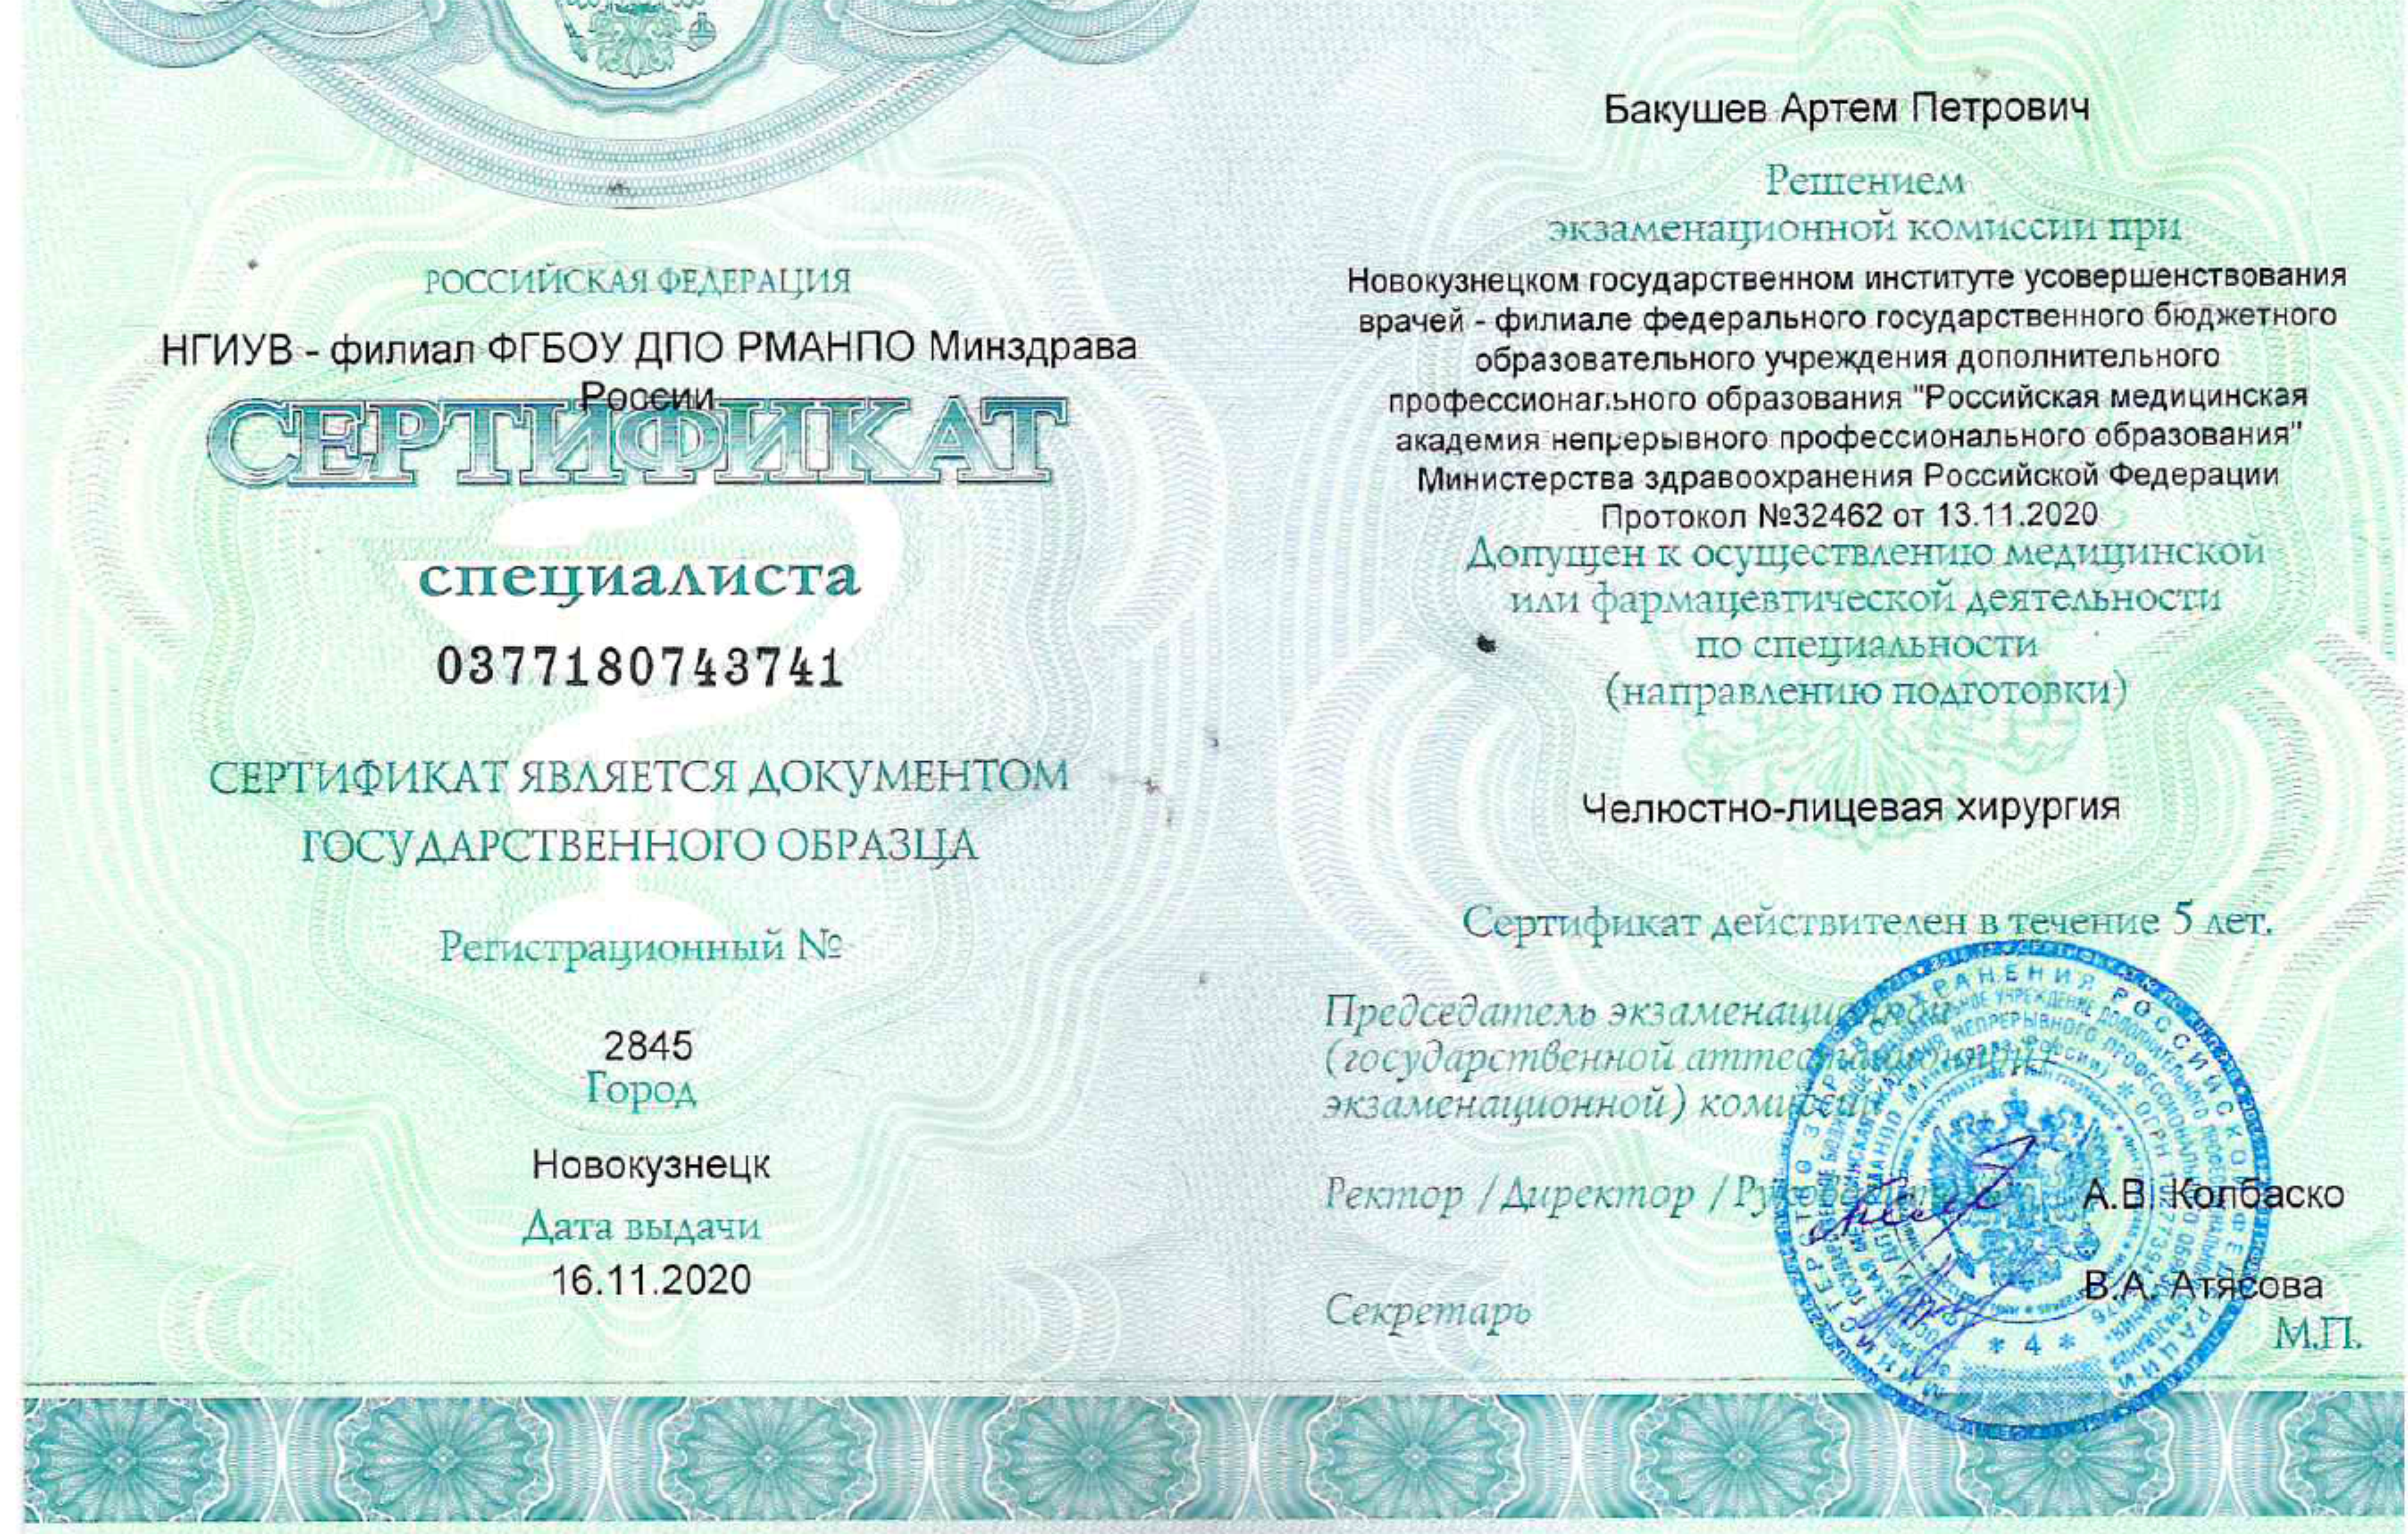 Сертификат специалиста "Челюстно-лицевая хирургия". 2020 г.